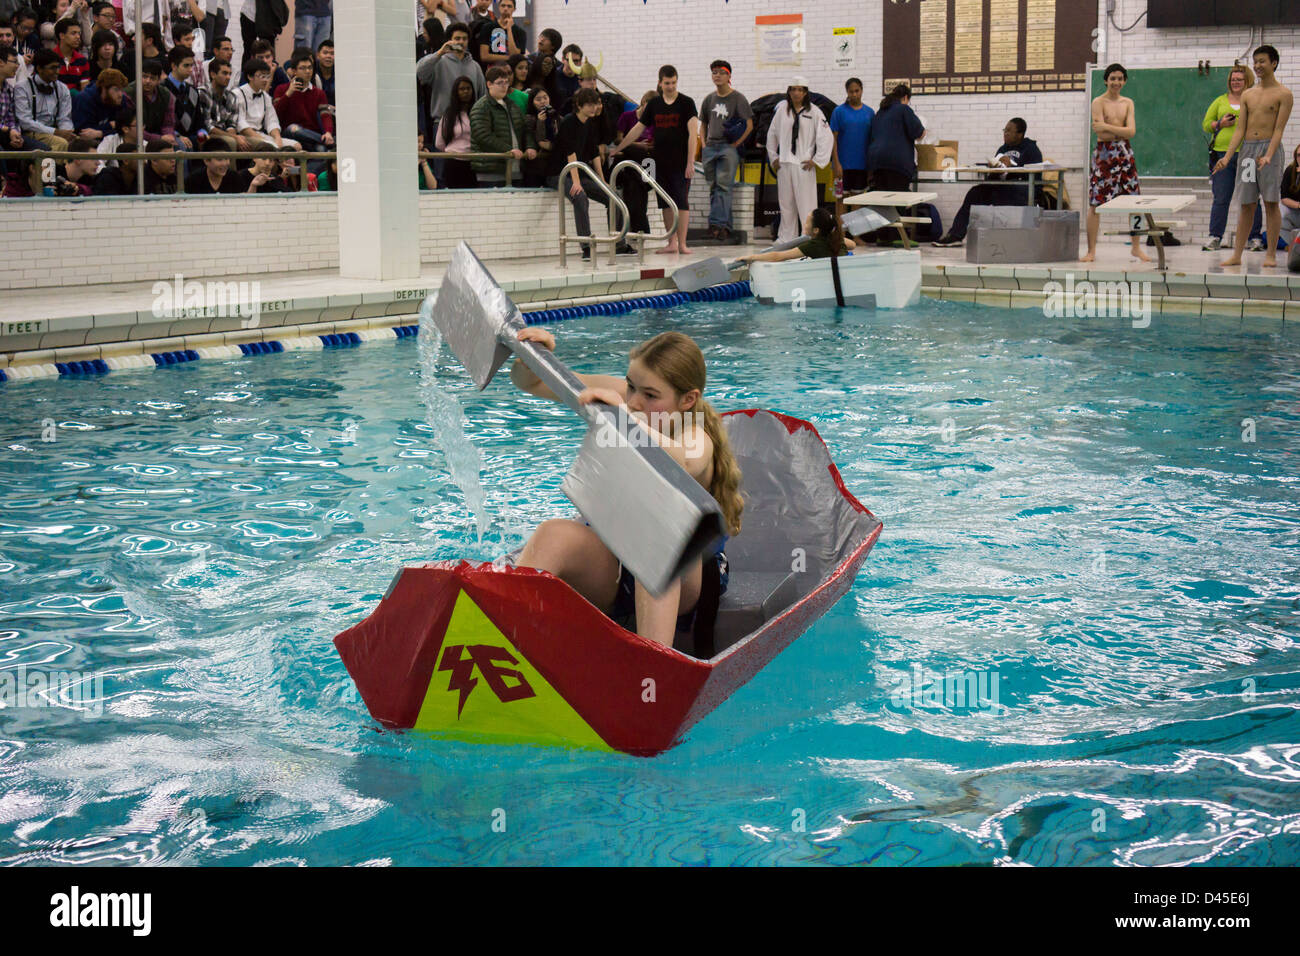 Brooklyn Technical High School's Cardboard Boat Regatta in the school's  pool in Brooklyn in New York Stock Photo - Alamy